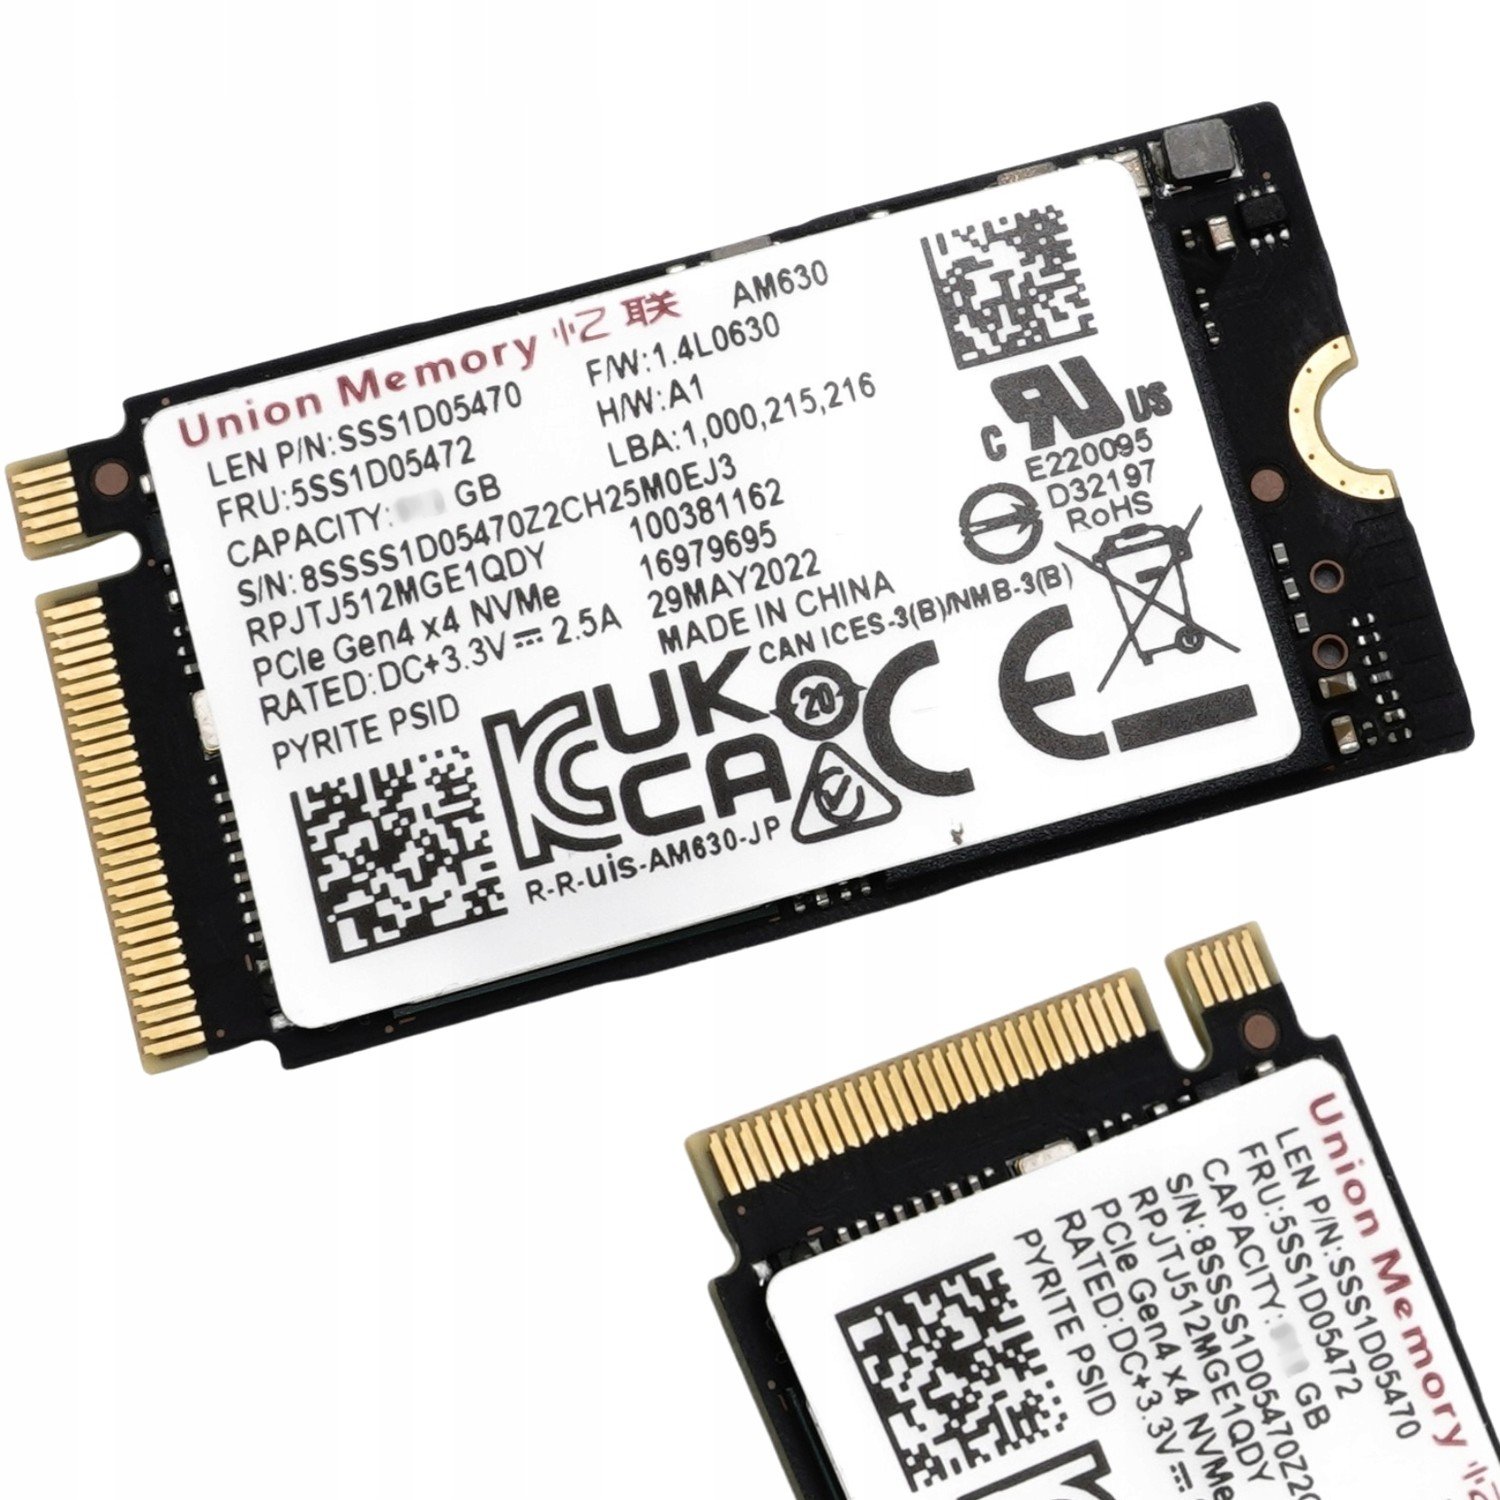 Disk Union Memory AM630 NVMe 512GB M.2 PCIe 2242